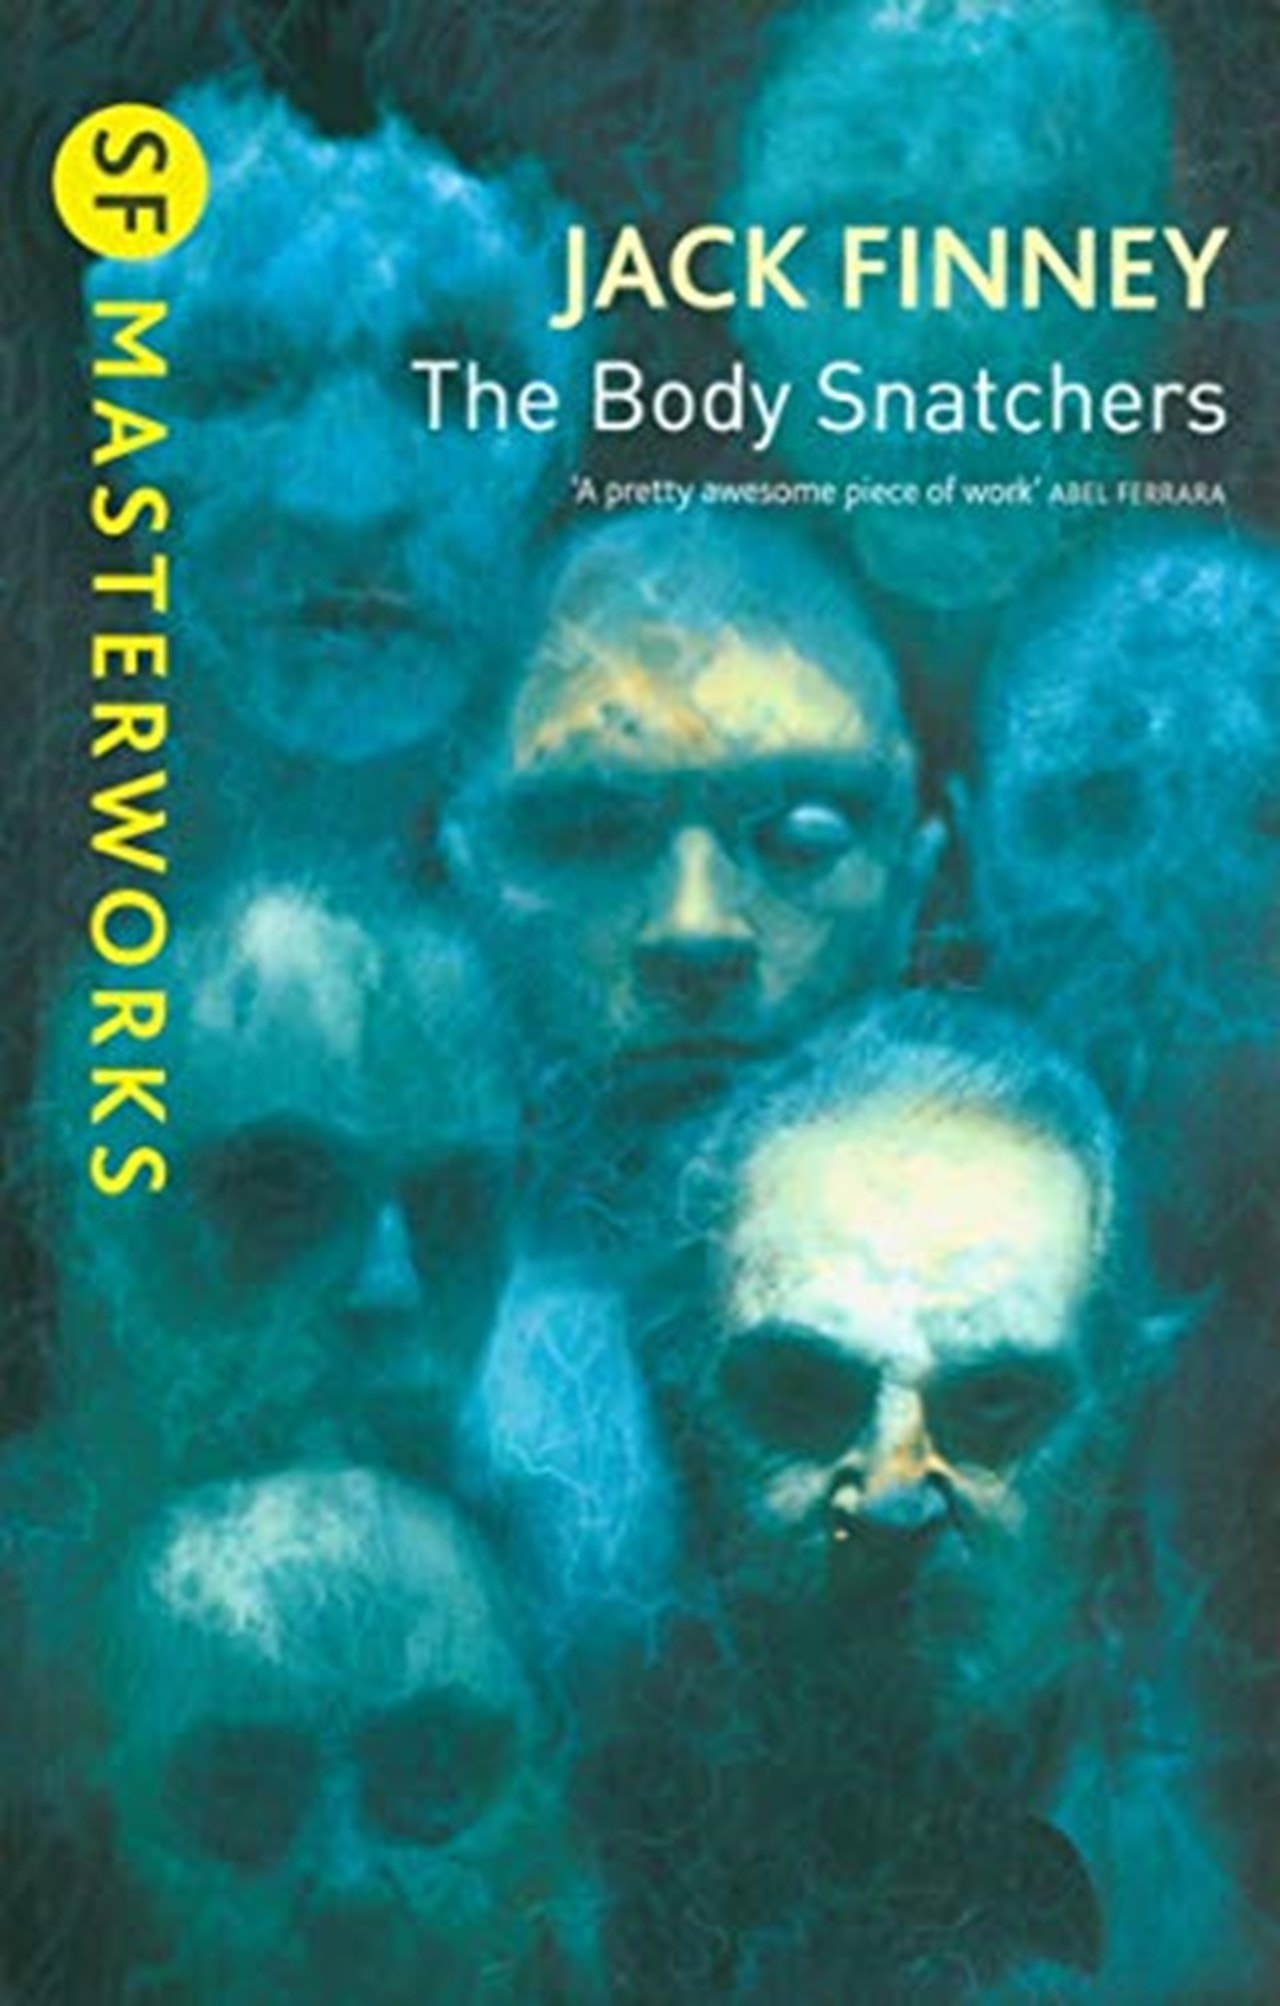 invasion of the body snatchers novel